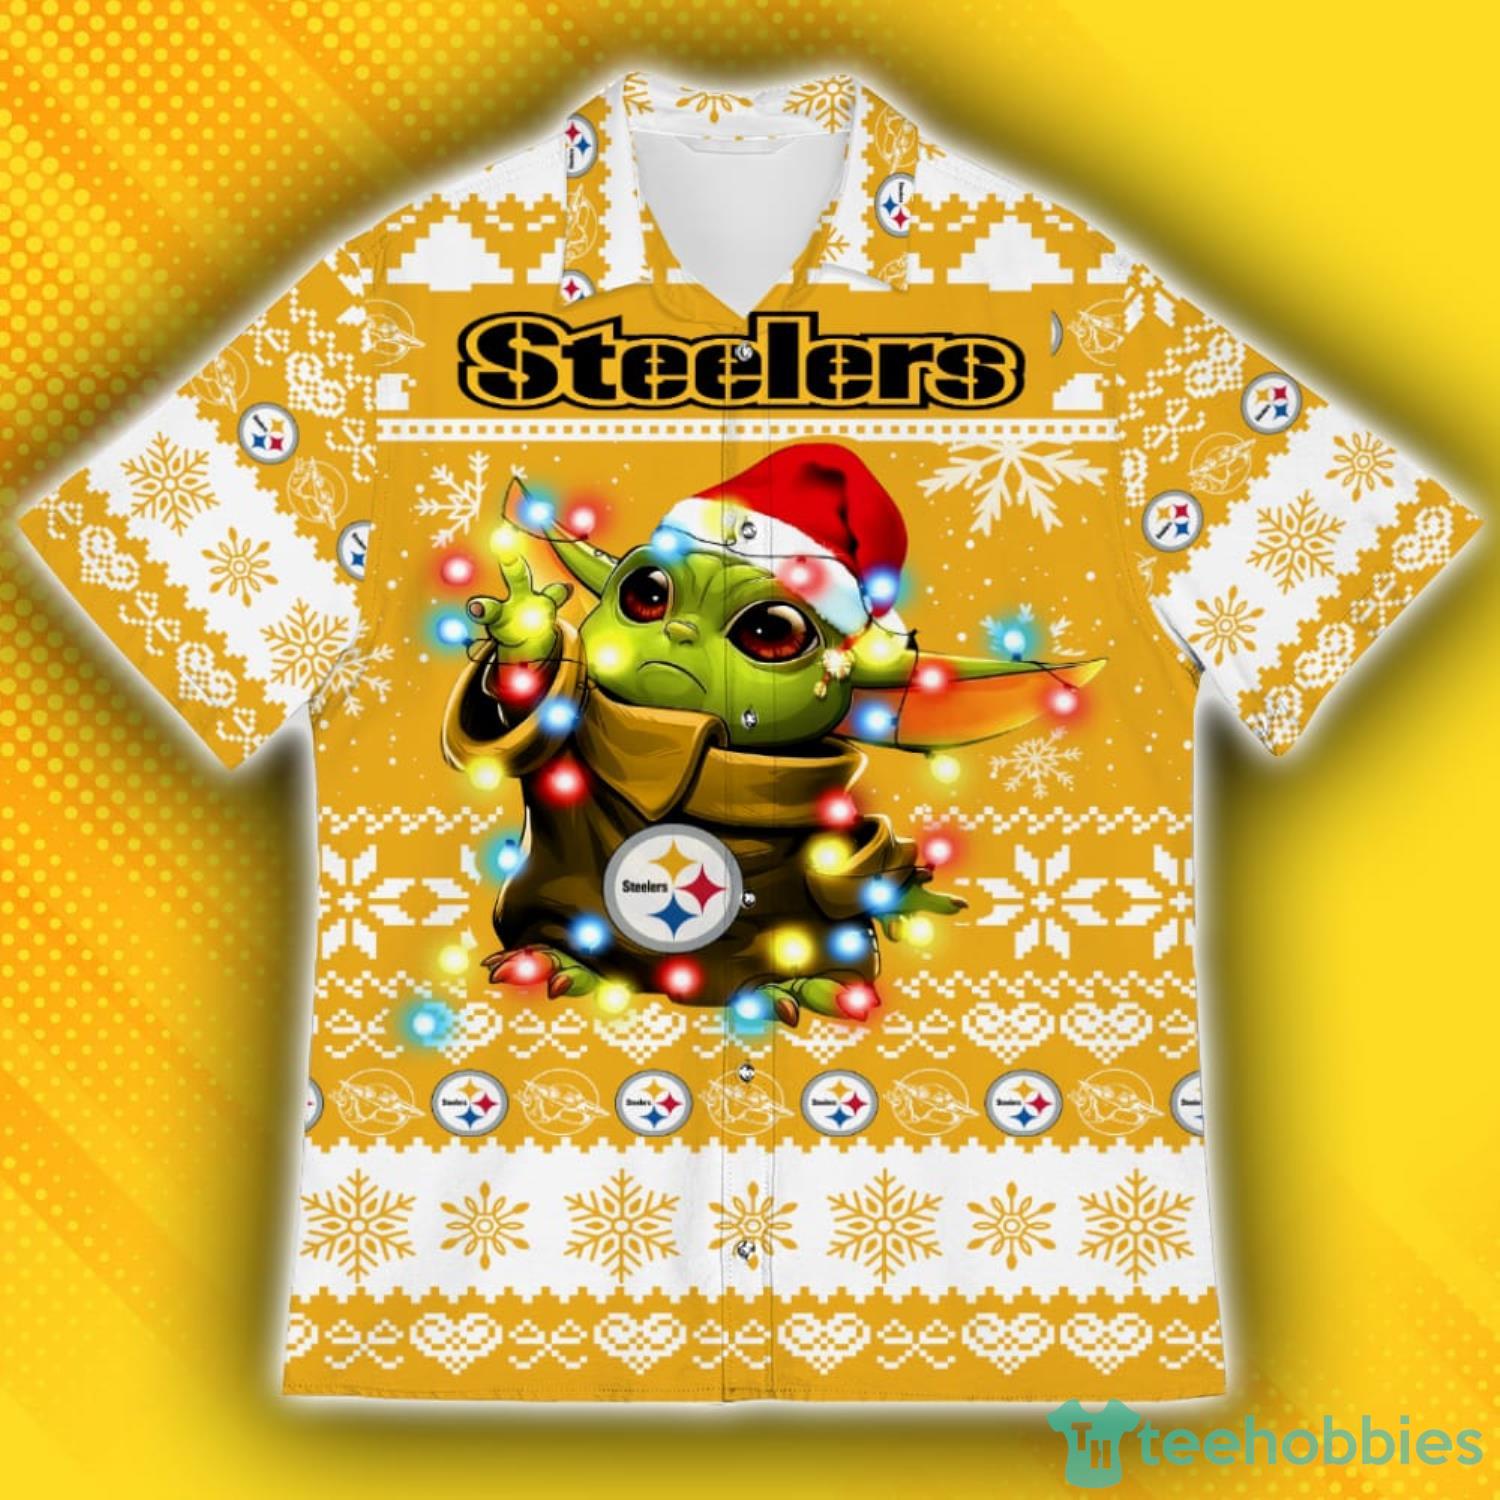 Milwaukee Brewers Baby Yoda Star Wars Christmas Hawaiian Shirt -  Freedomdesign